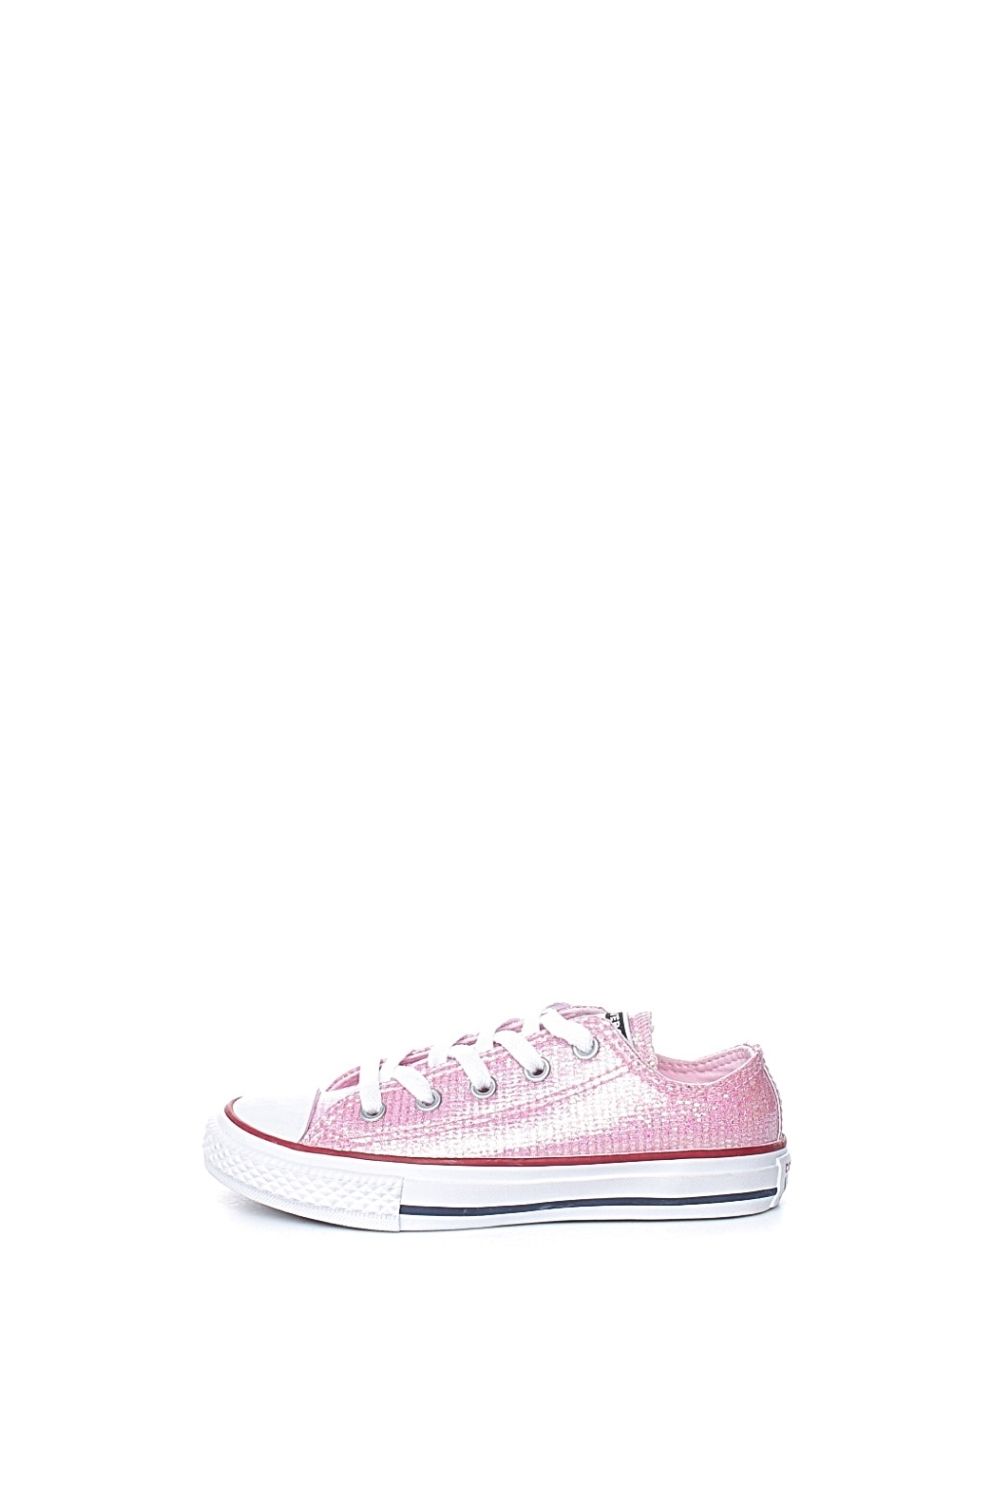 CONVERSE – Παιδικα sneakers με glitter CONVERSE Chuck Taylor All Star ροζ